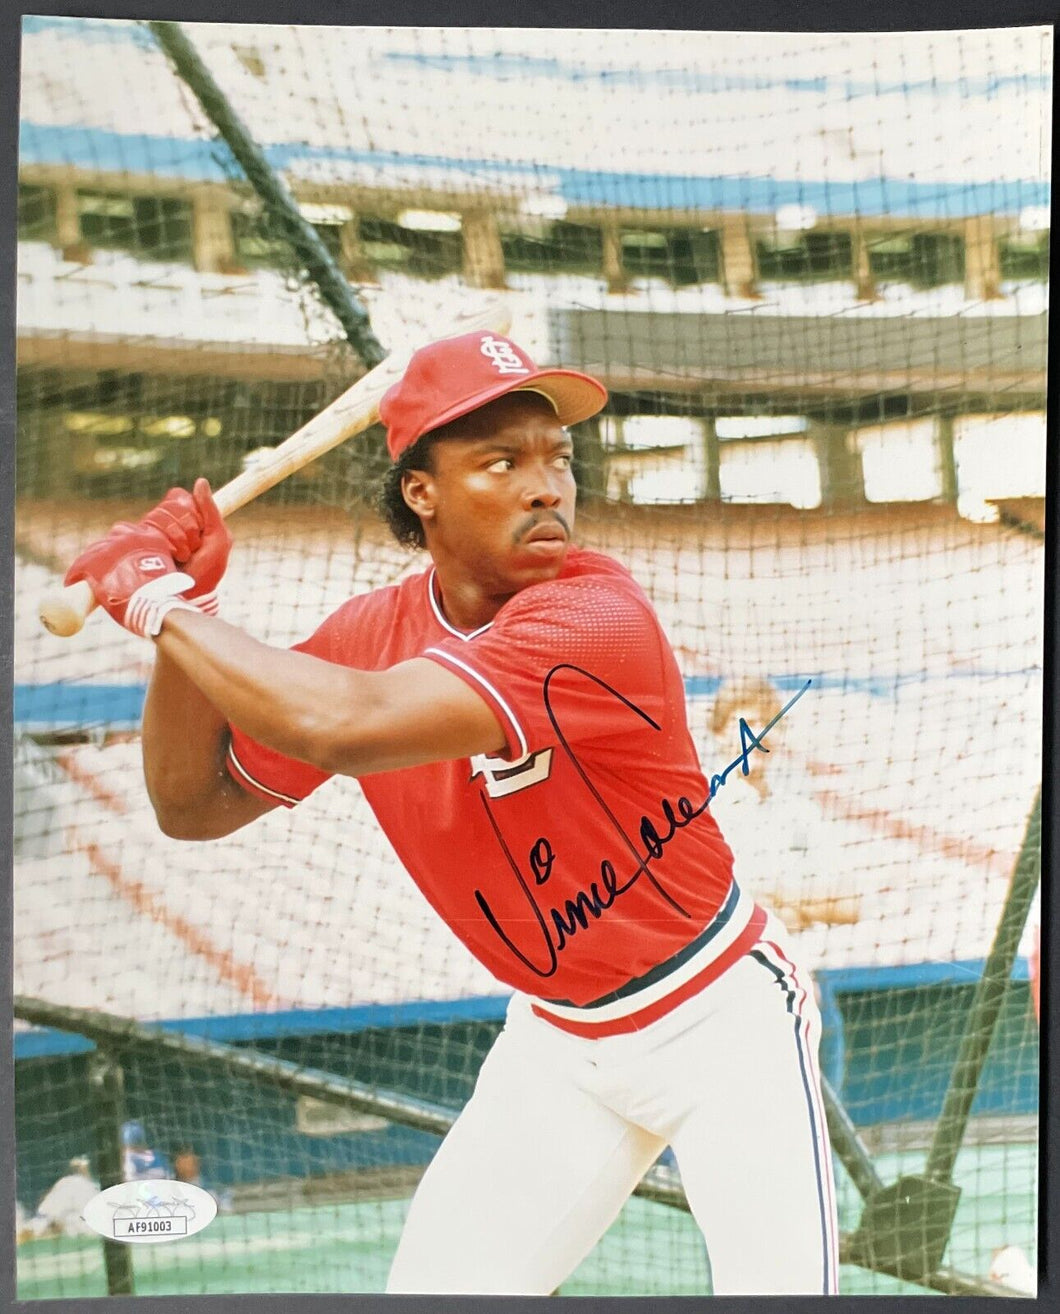 Vince Coleman Signed St. Louis Cardinals Photo Autographed MLB Baseball 8x10 JSA